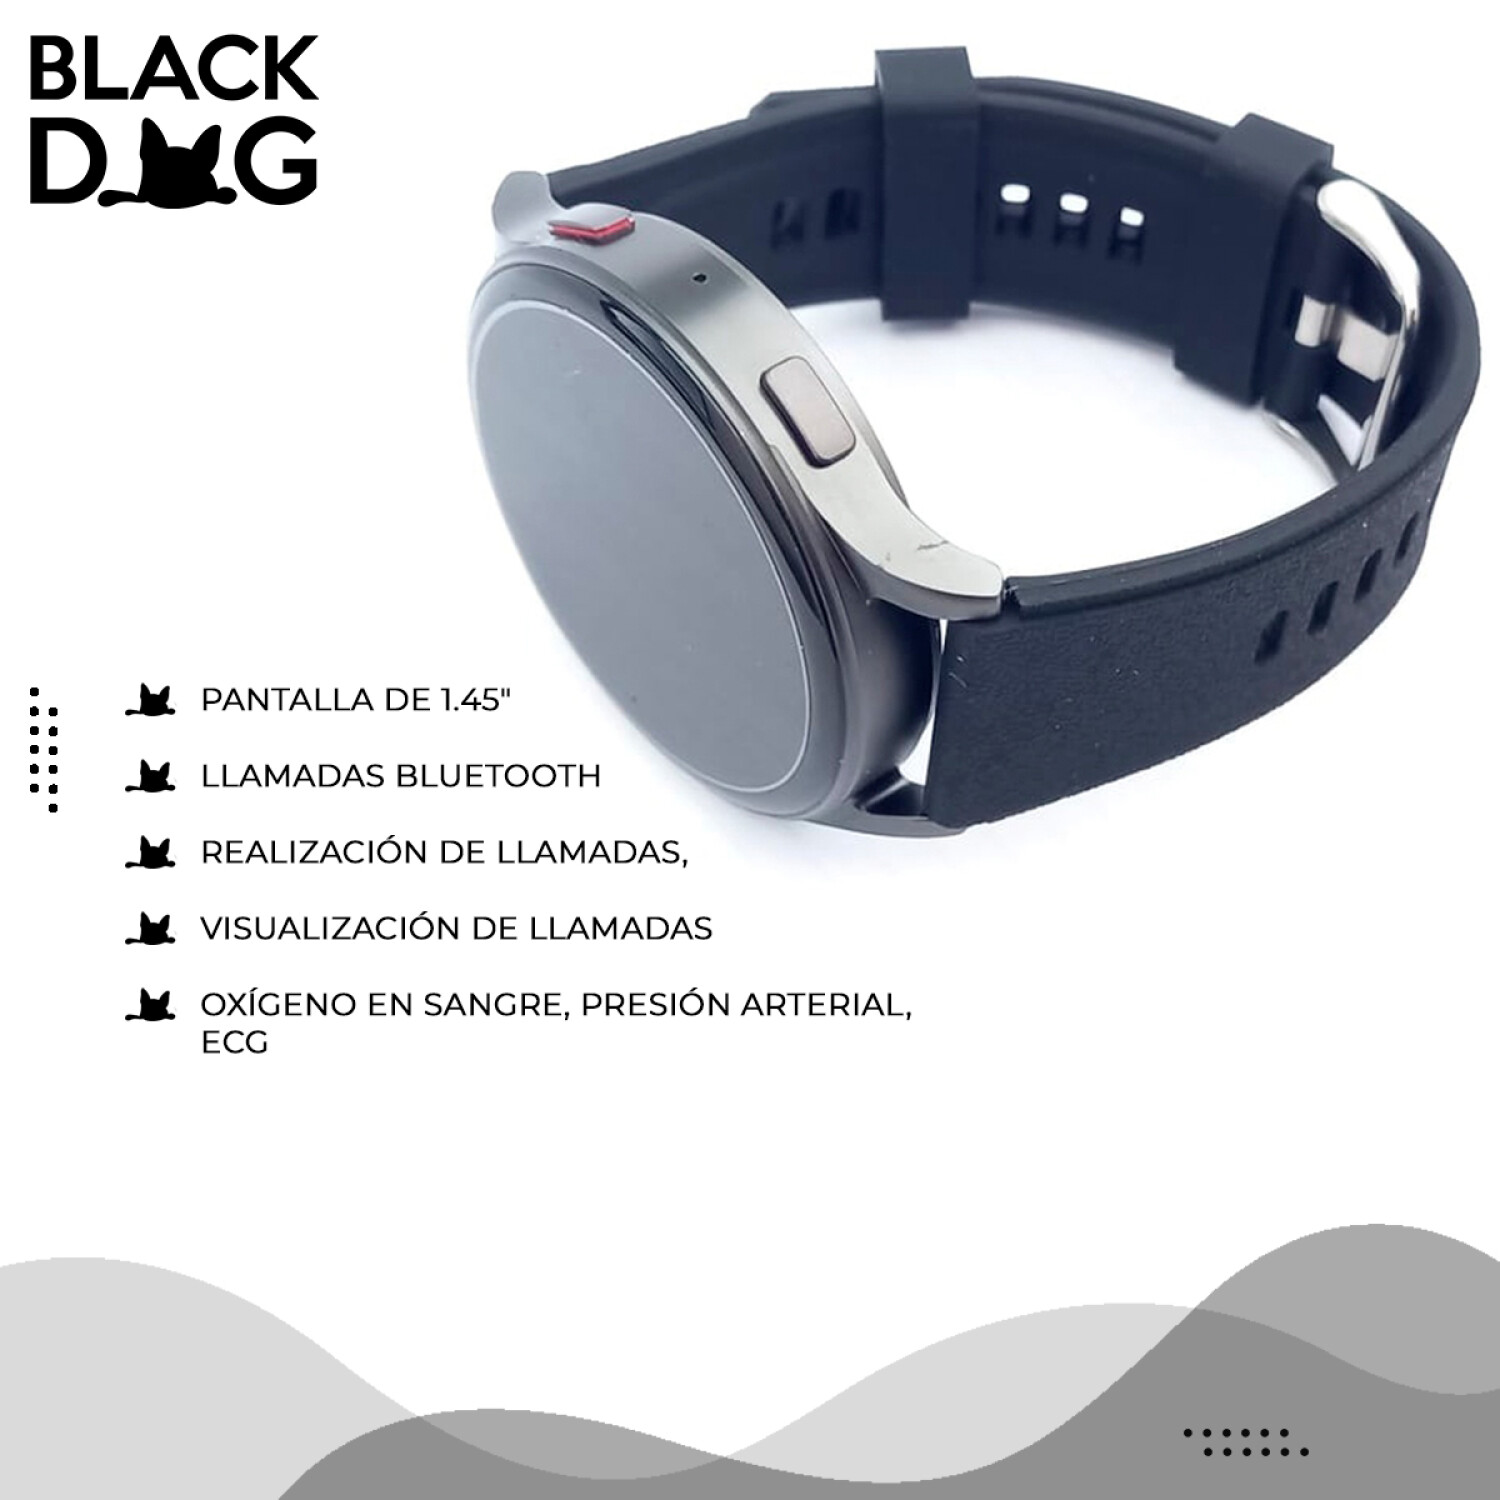 Smartwatch Reloj Smart Xion Pantalla 1.45 X-watch88 Negro — Black Dog